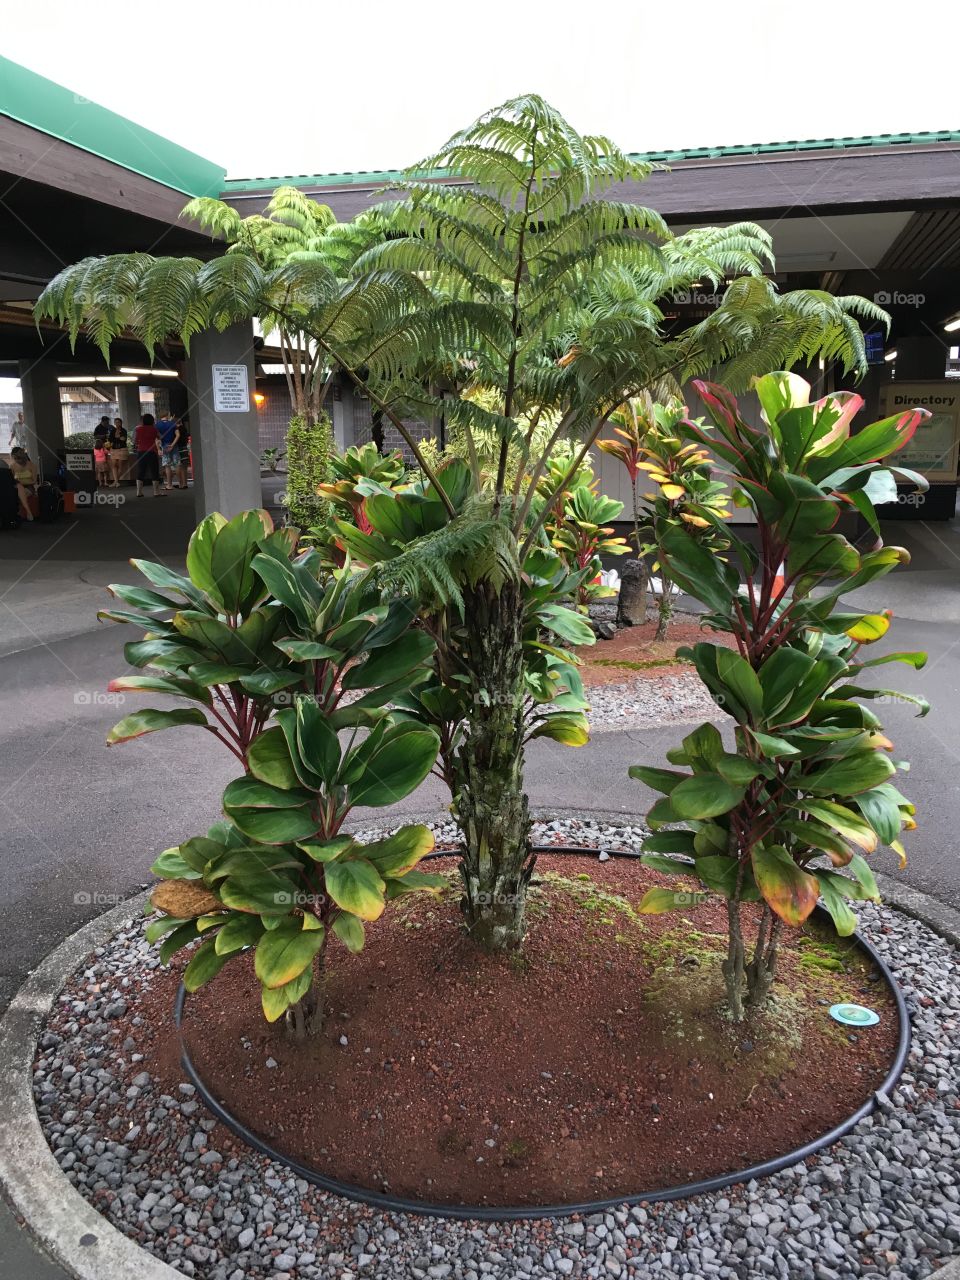 Hilo Airport, Hawaii